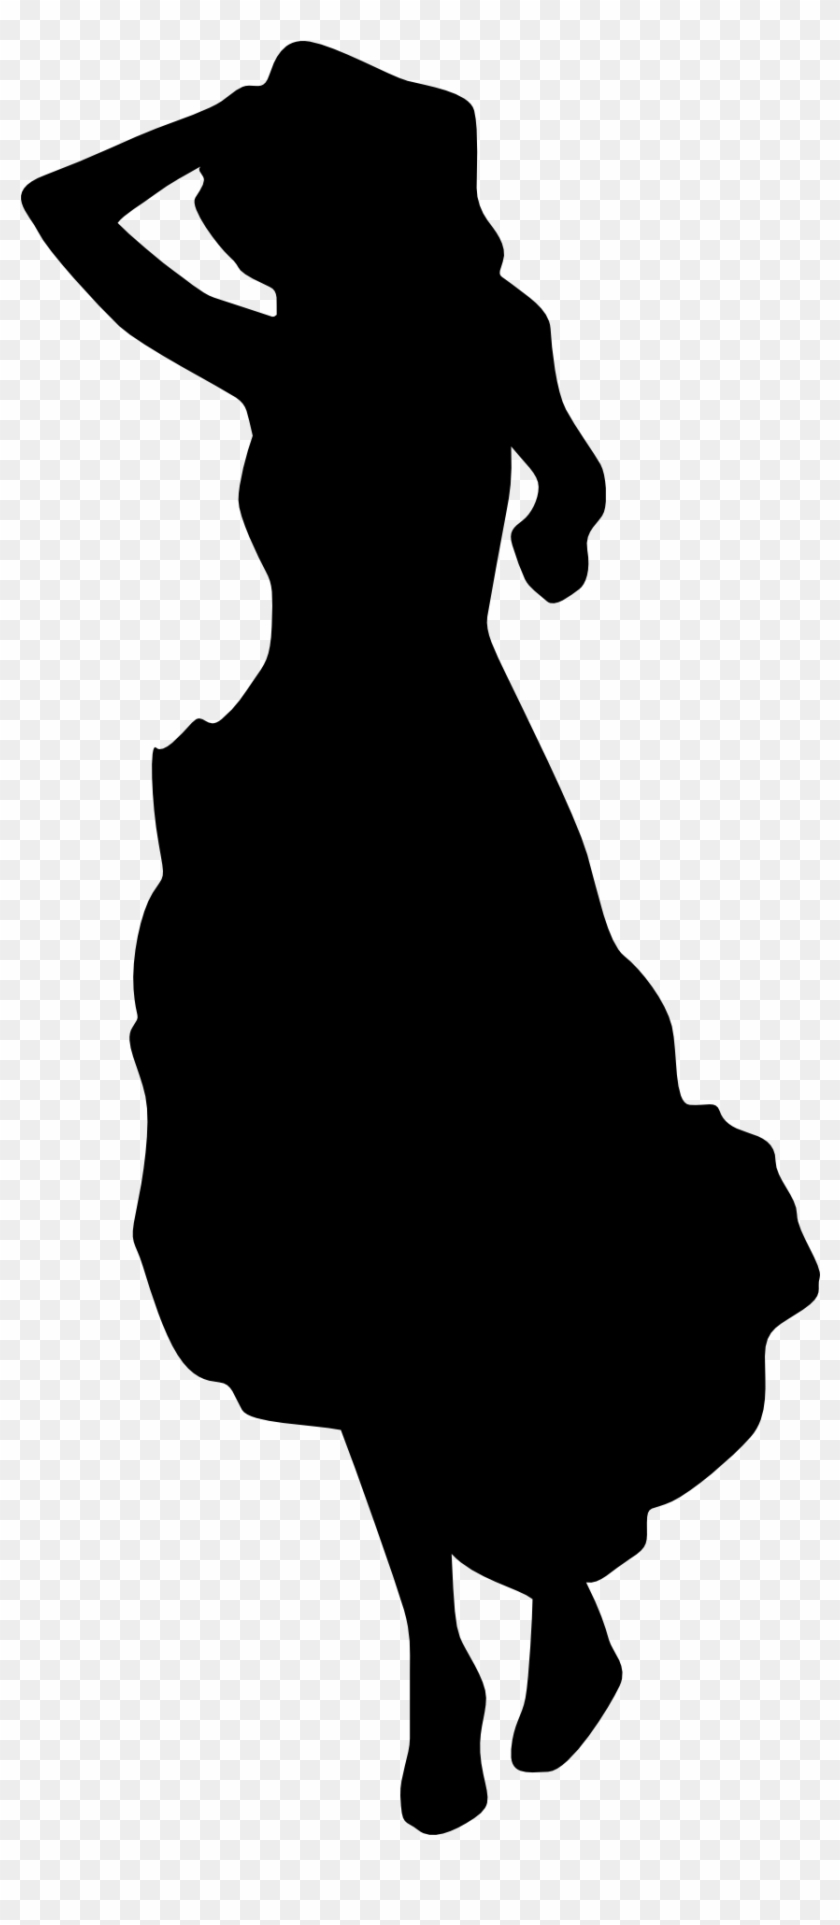 Lady Moving Woman Dress Silhouette Black White Drawing - Woman In Dress Silhouette Png Clipart #6017604